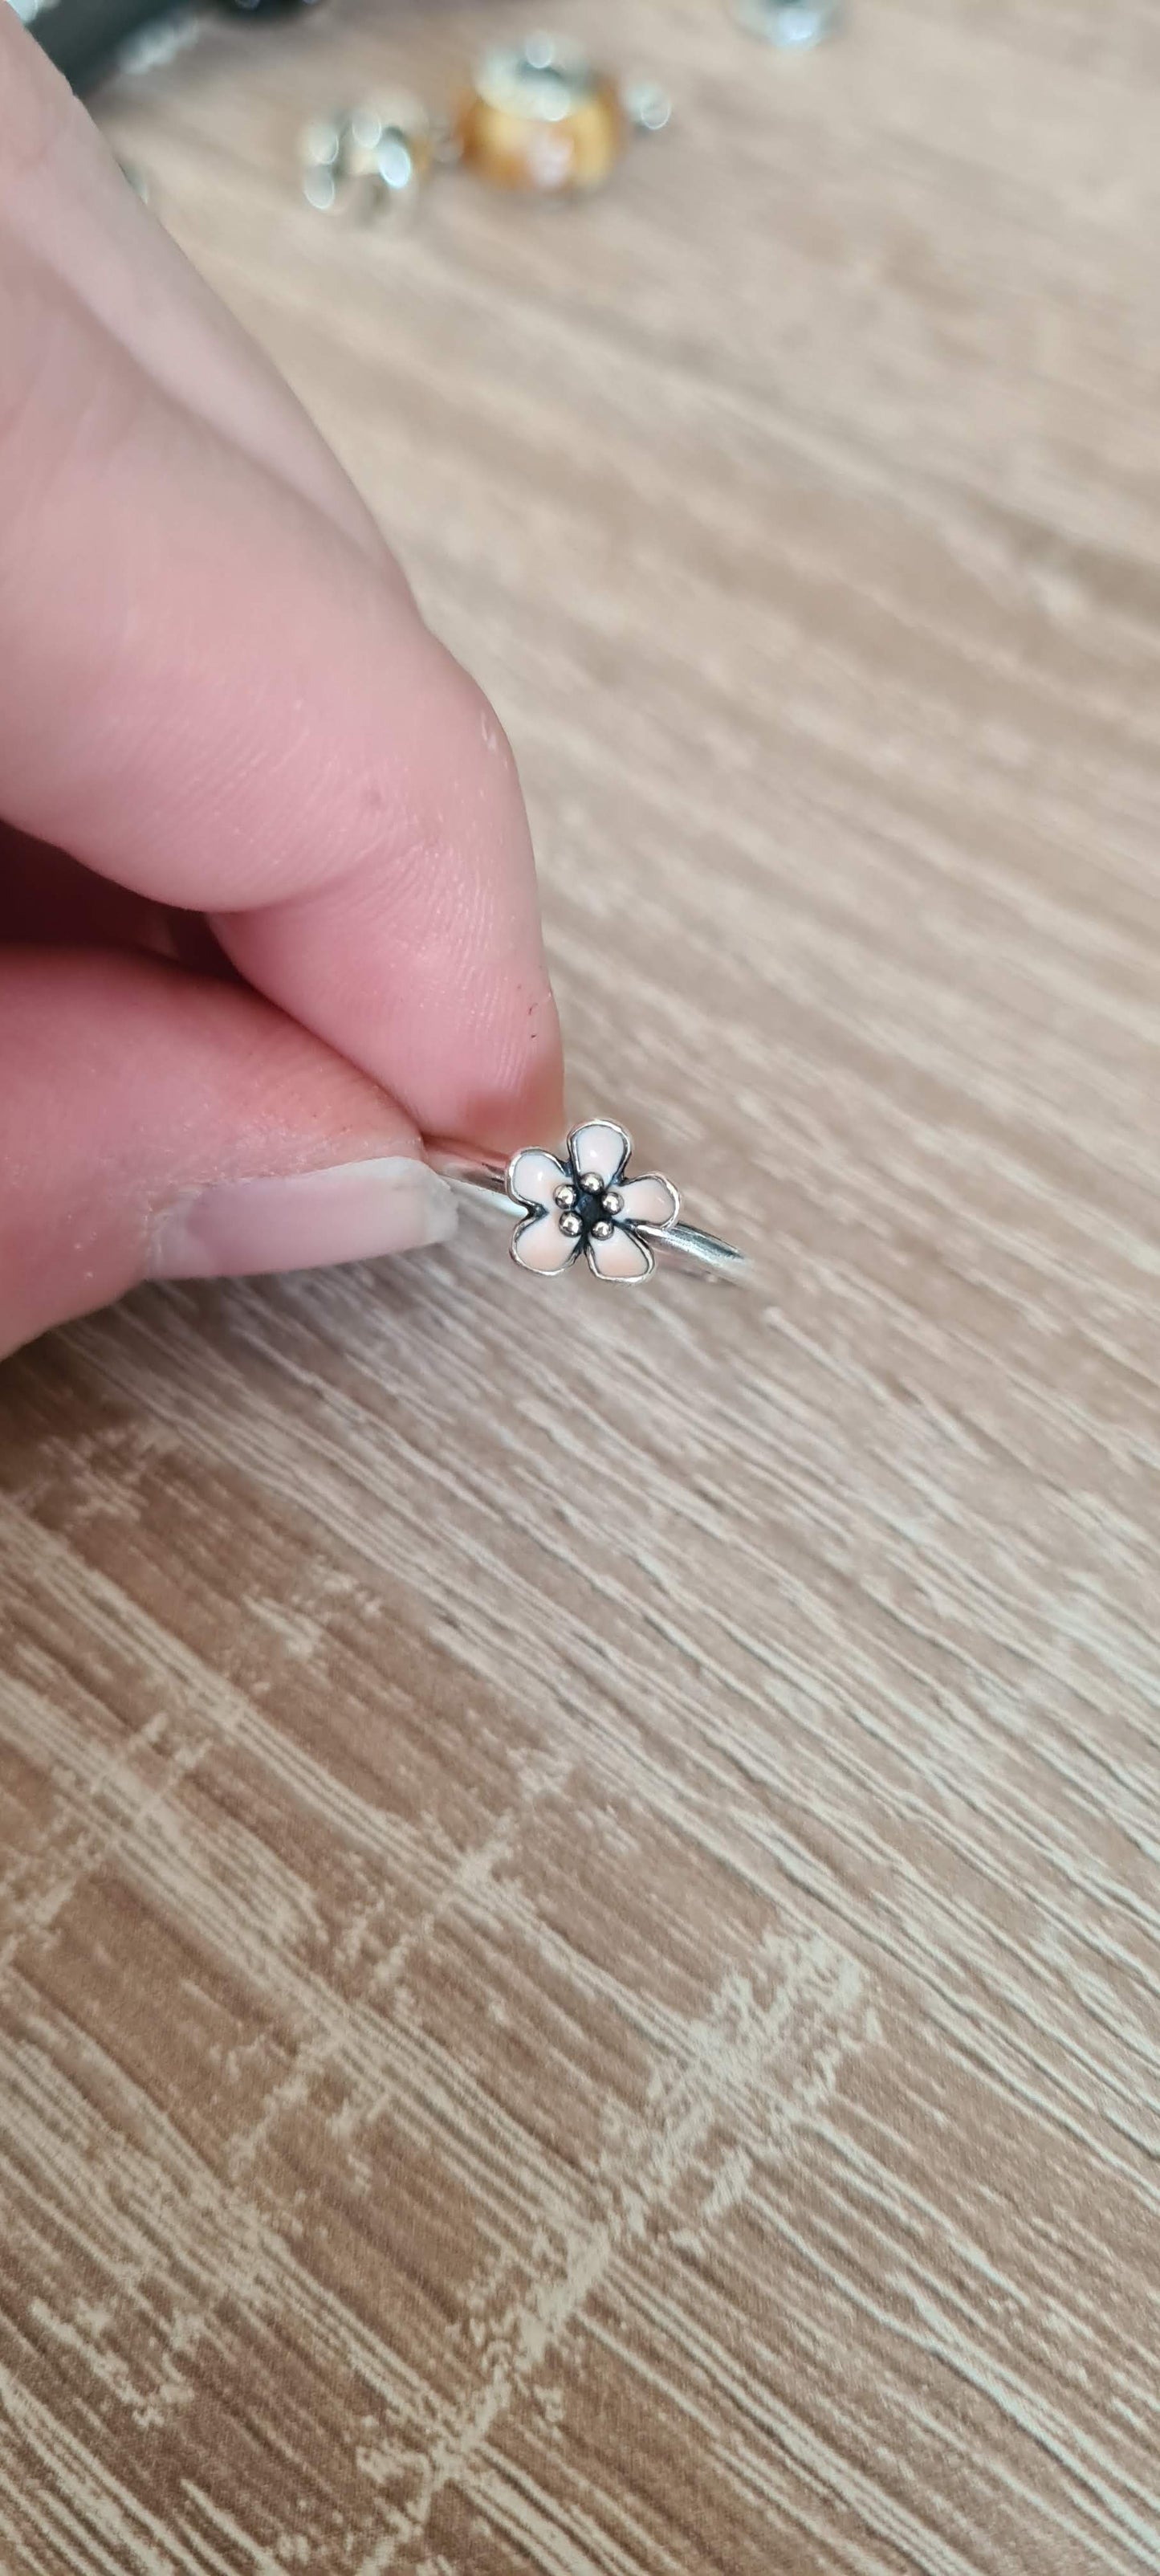 Genuine Pandora Cherry Blossom Ring Sizes